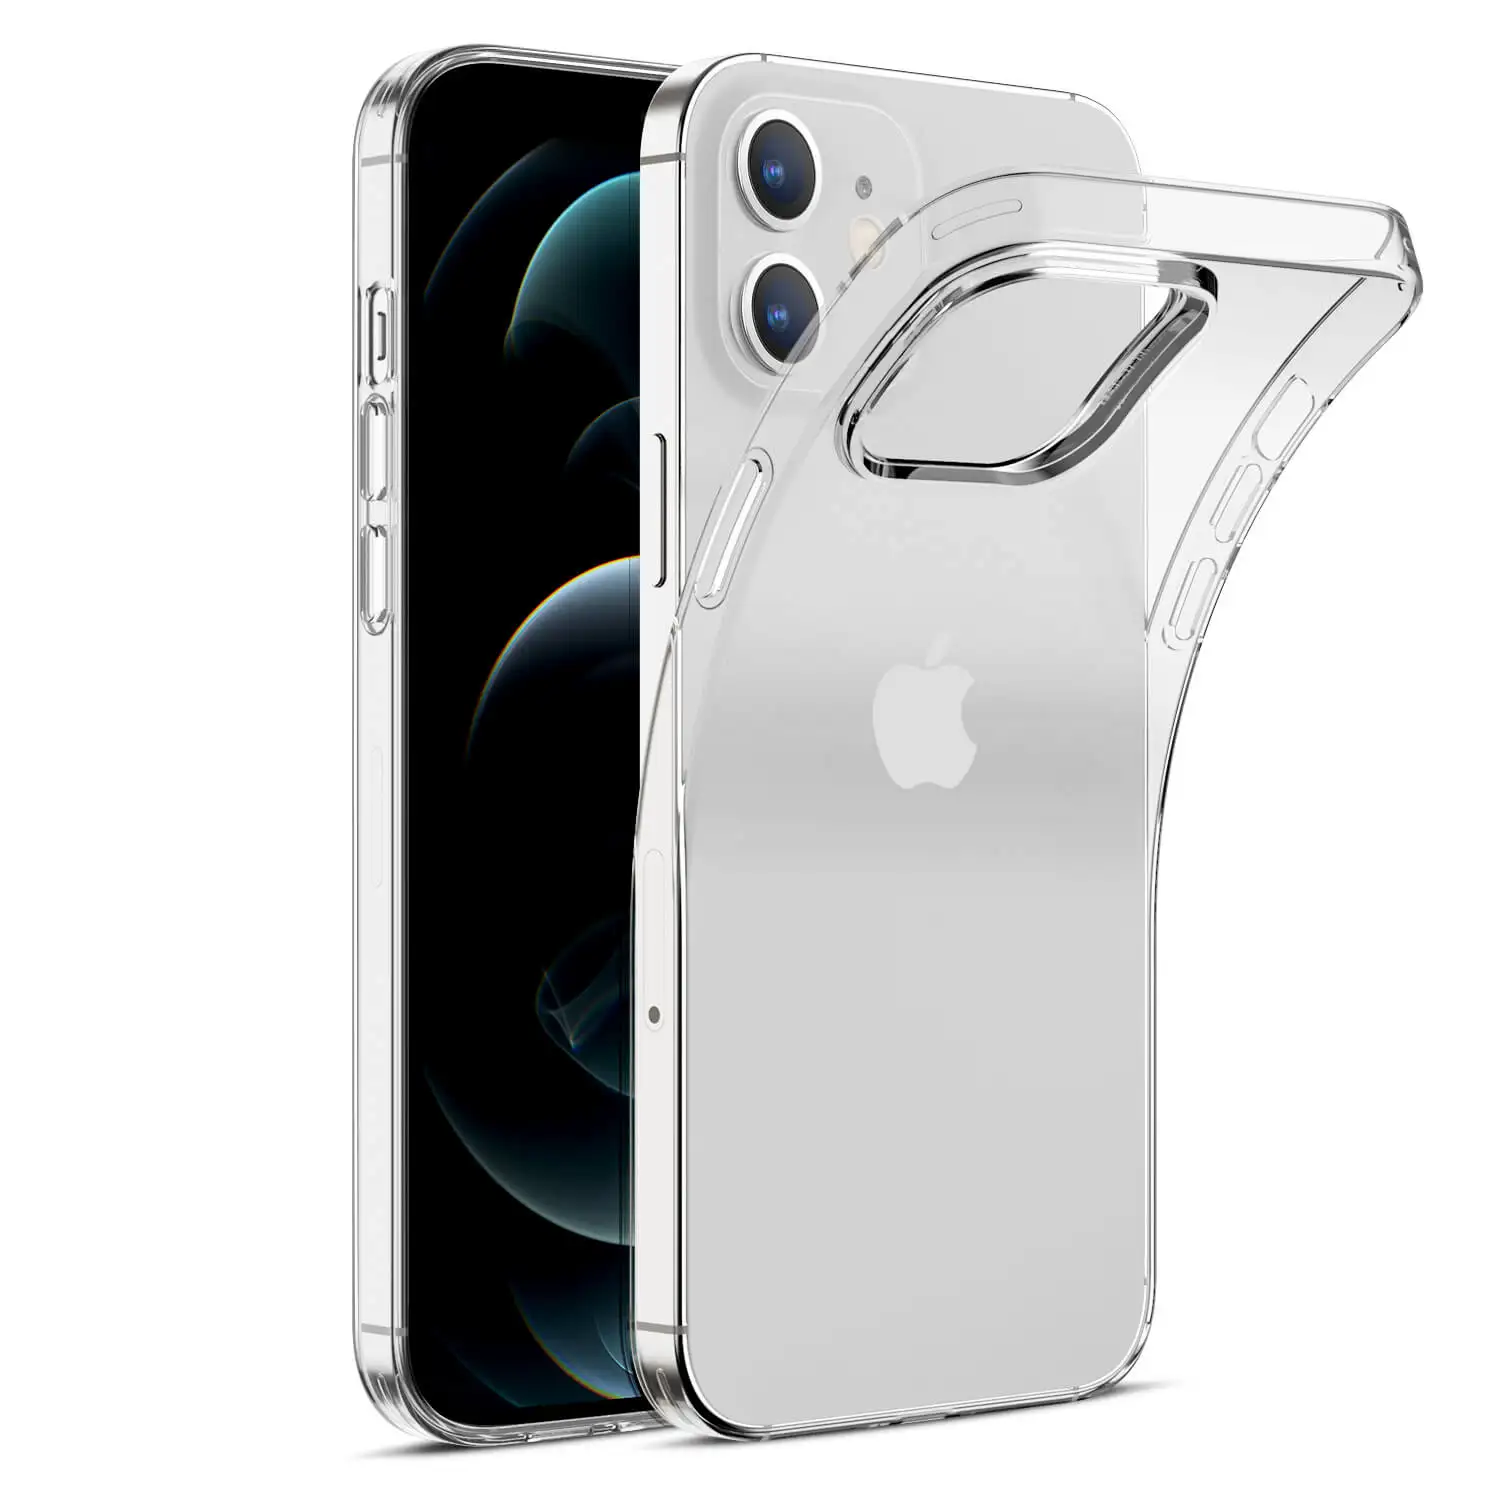 Carcasa de TPU transparente suave para iPhone 12 Mini